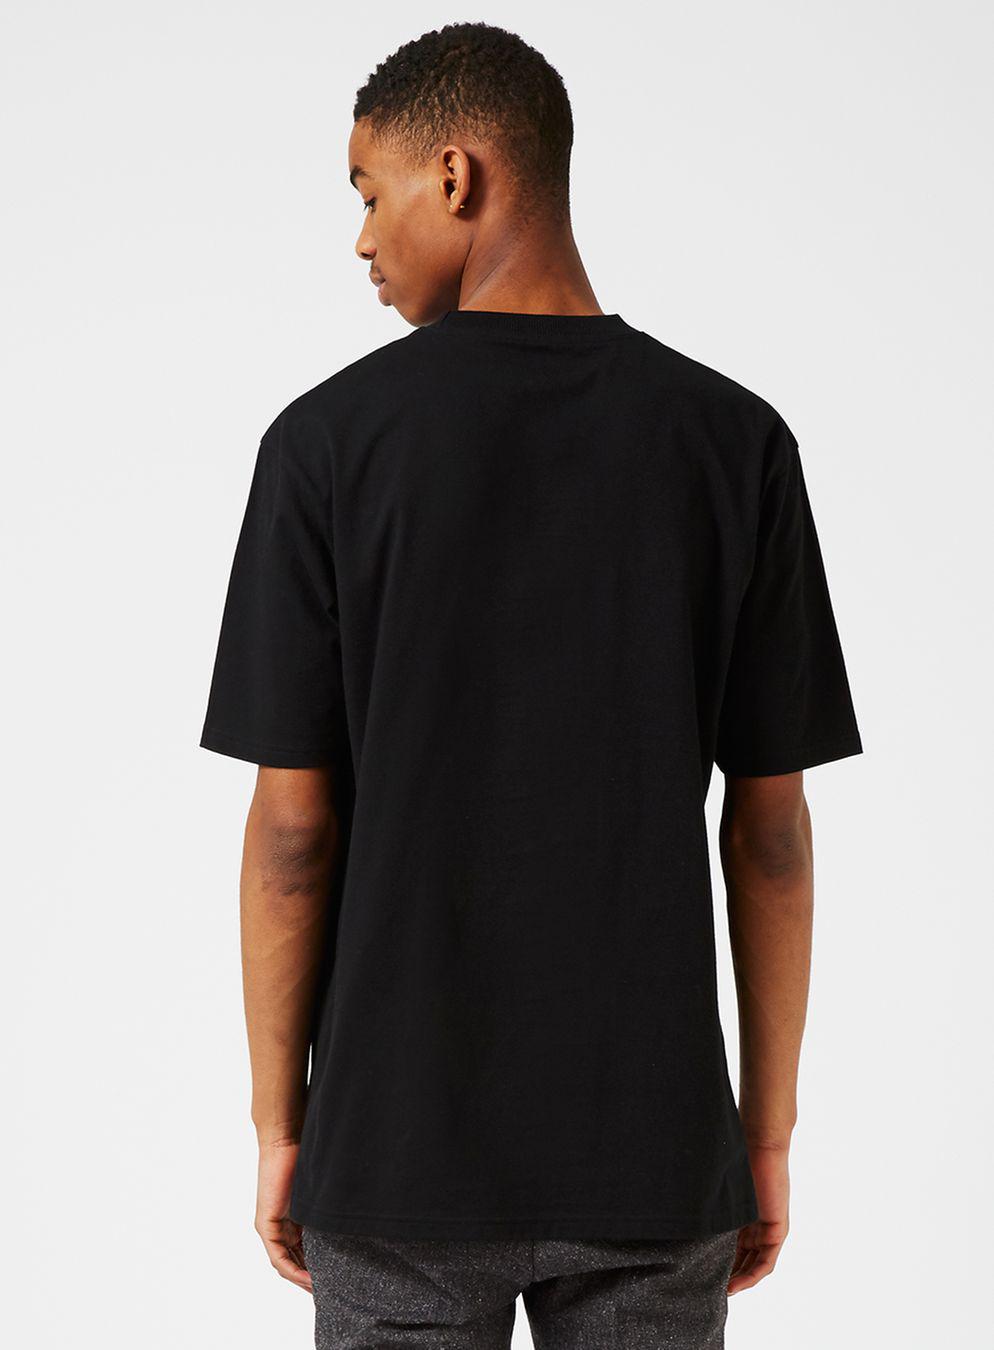 TOPMAN Cotton Black '90s Style Oversized T-shirt for Men - Lyst